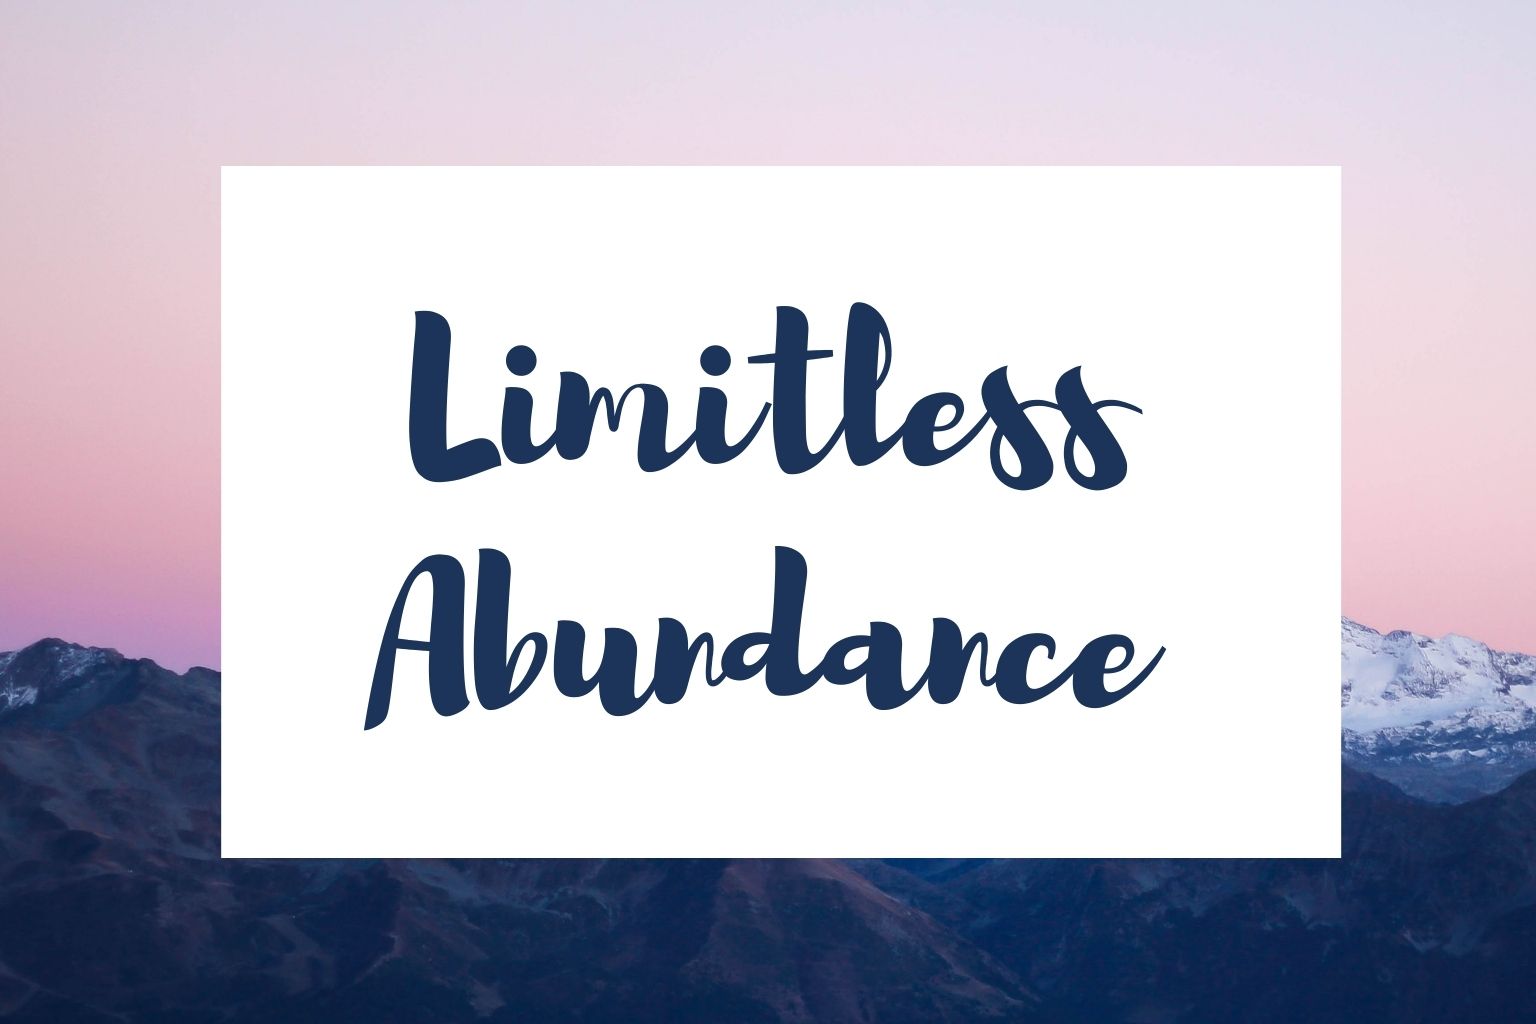 Limitless Abundance